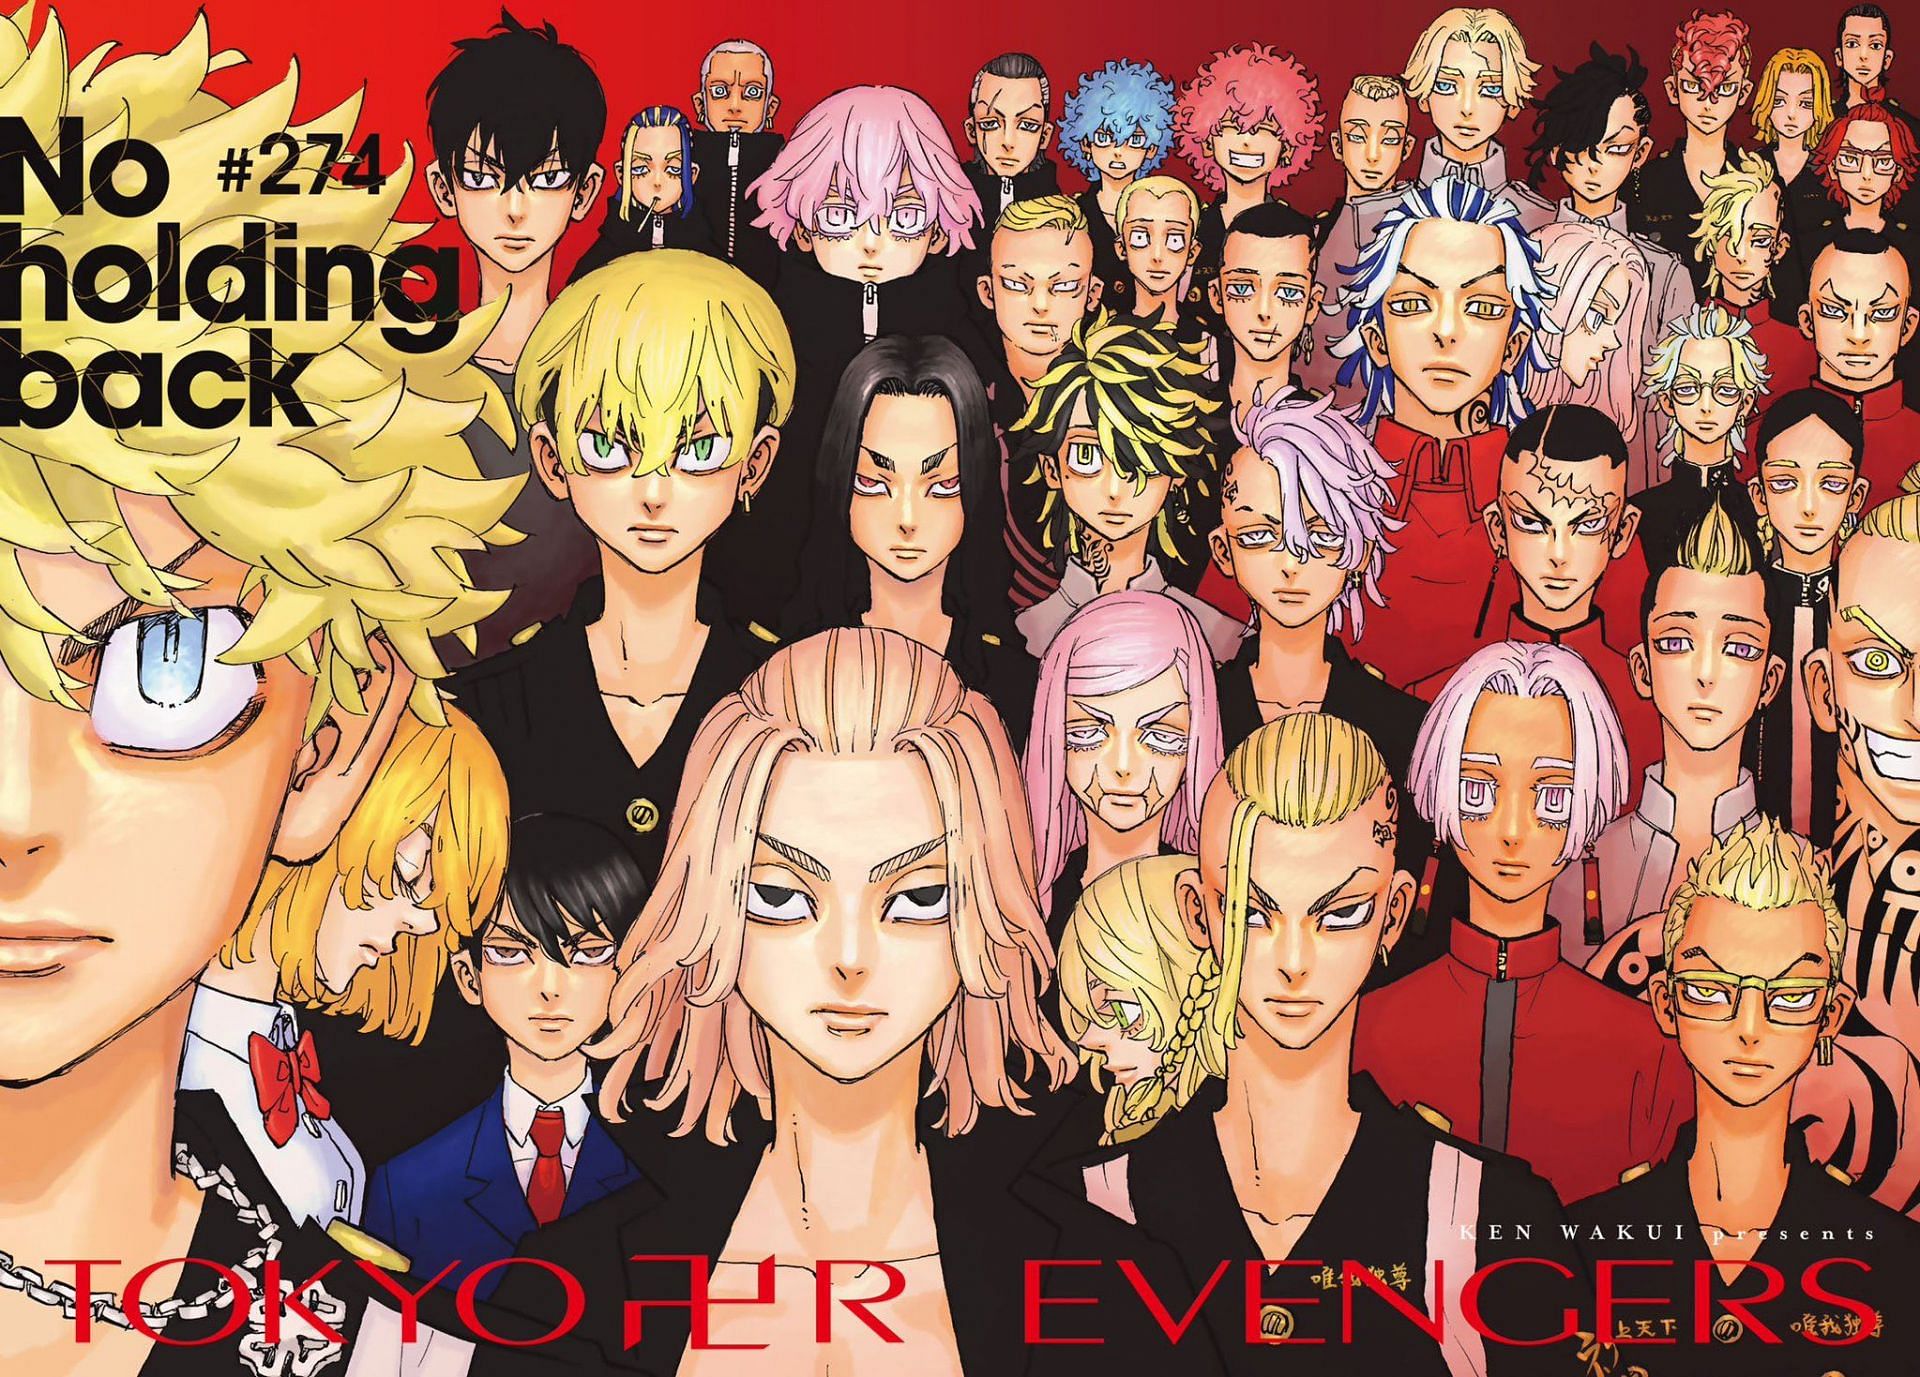 Cover of Tokyo Revengers chapter 274 (Image via Ken Wakui/ Kodansha)